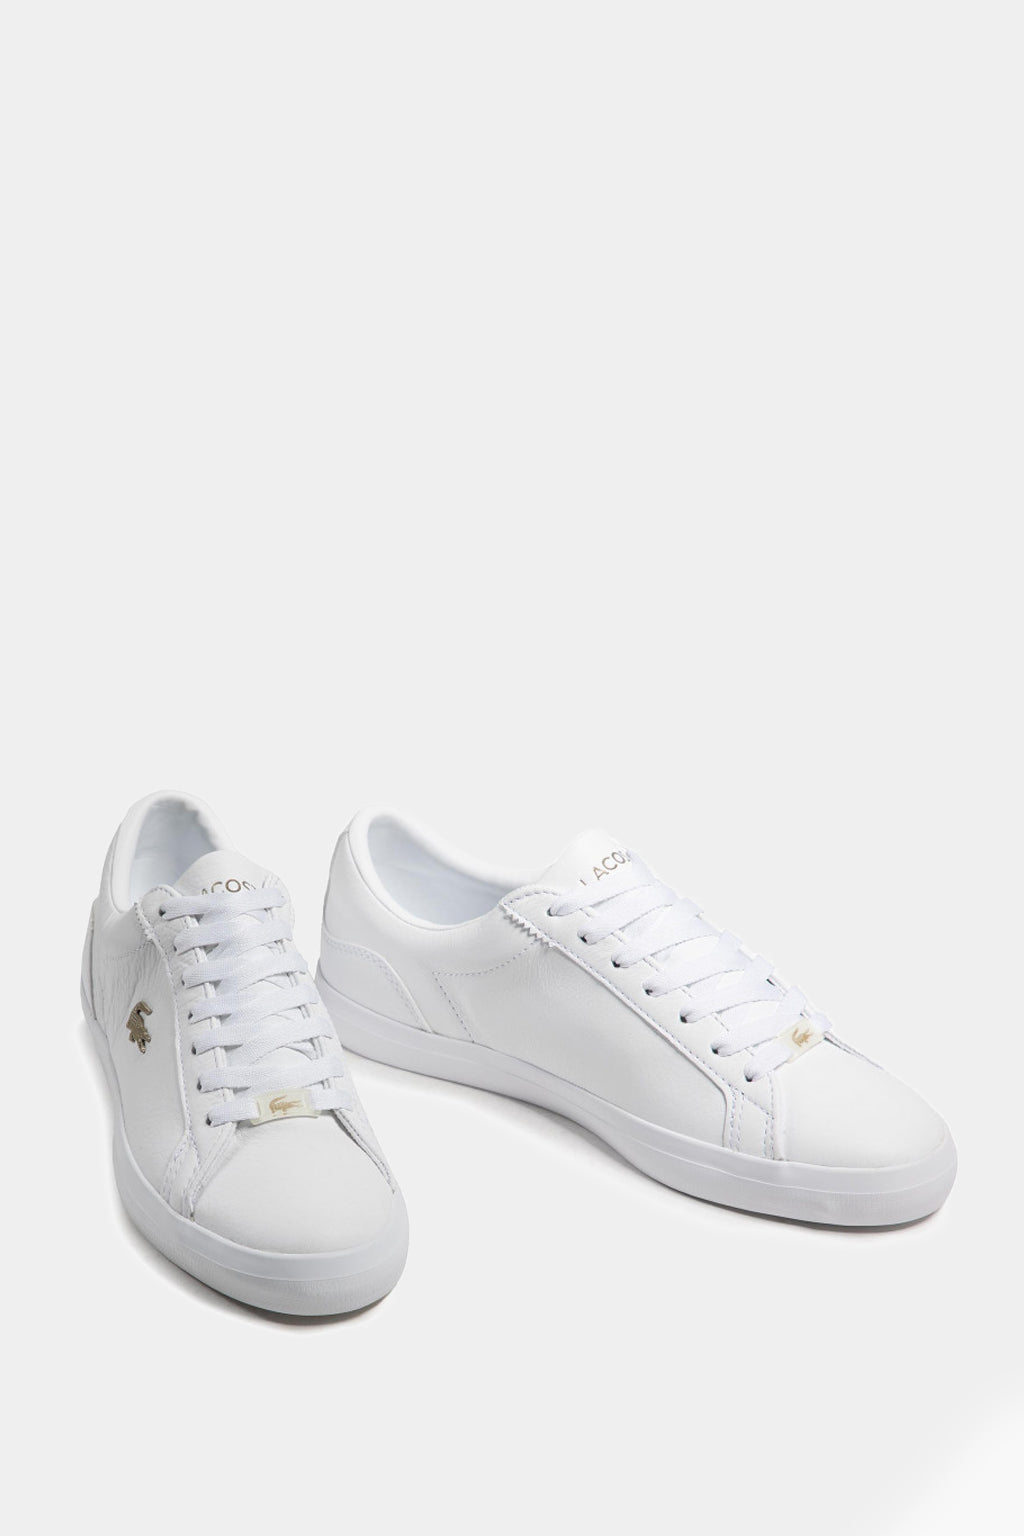 Lacoste - Men's Lerond Sneakers White